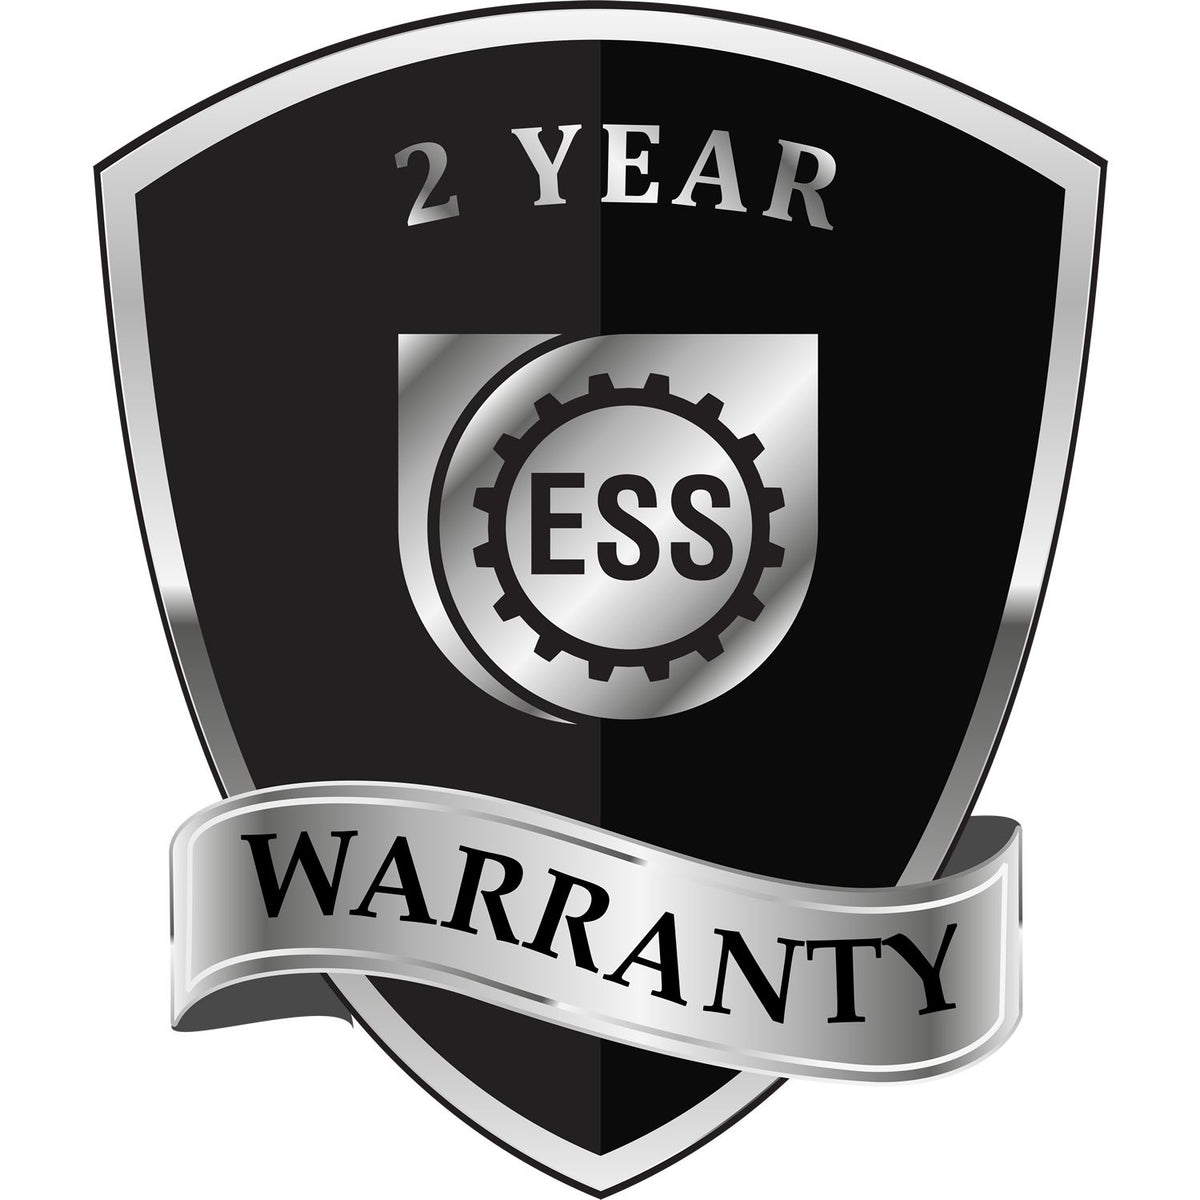 A black and silver badge or emblem showing warranty information for the Hybrid Arkansas Landscape Architect Seal